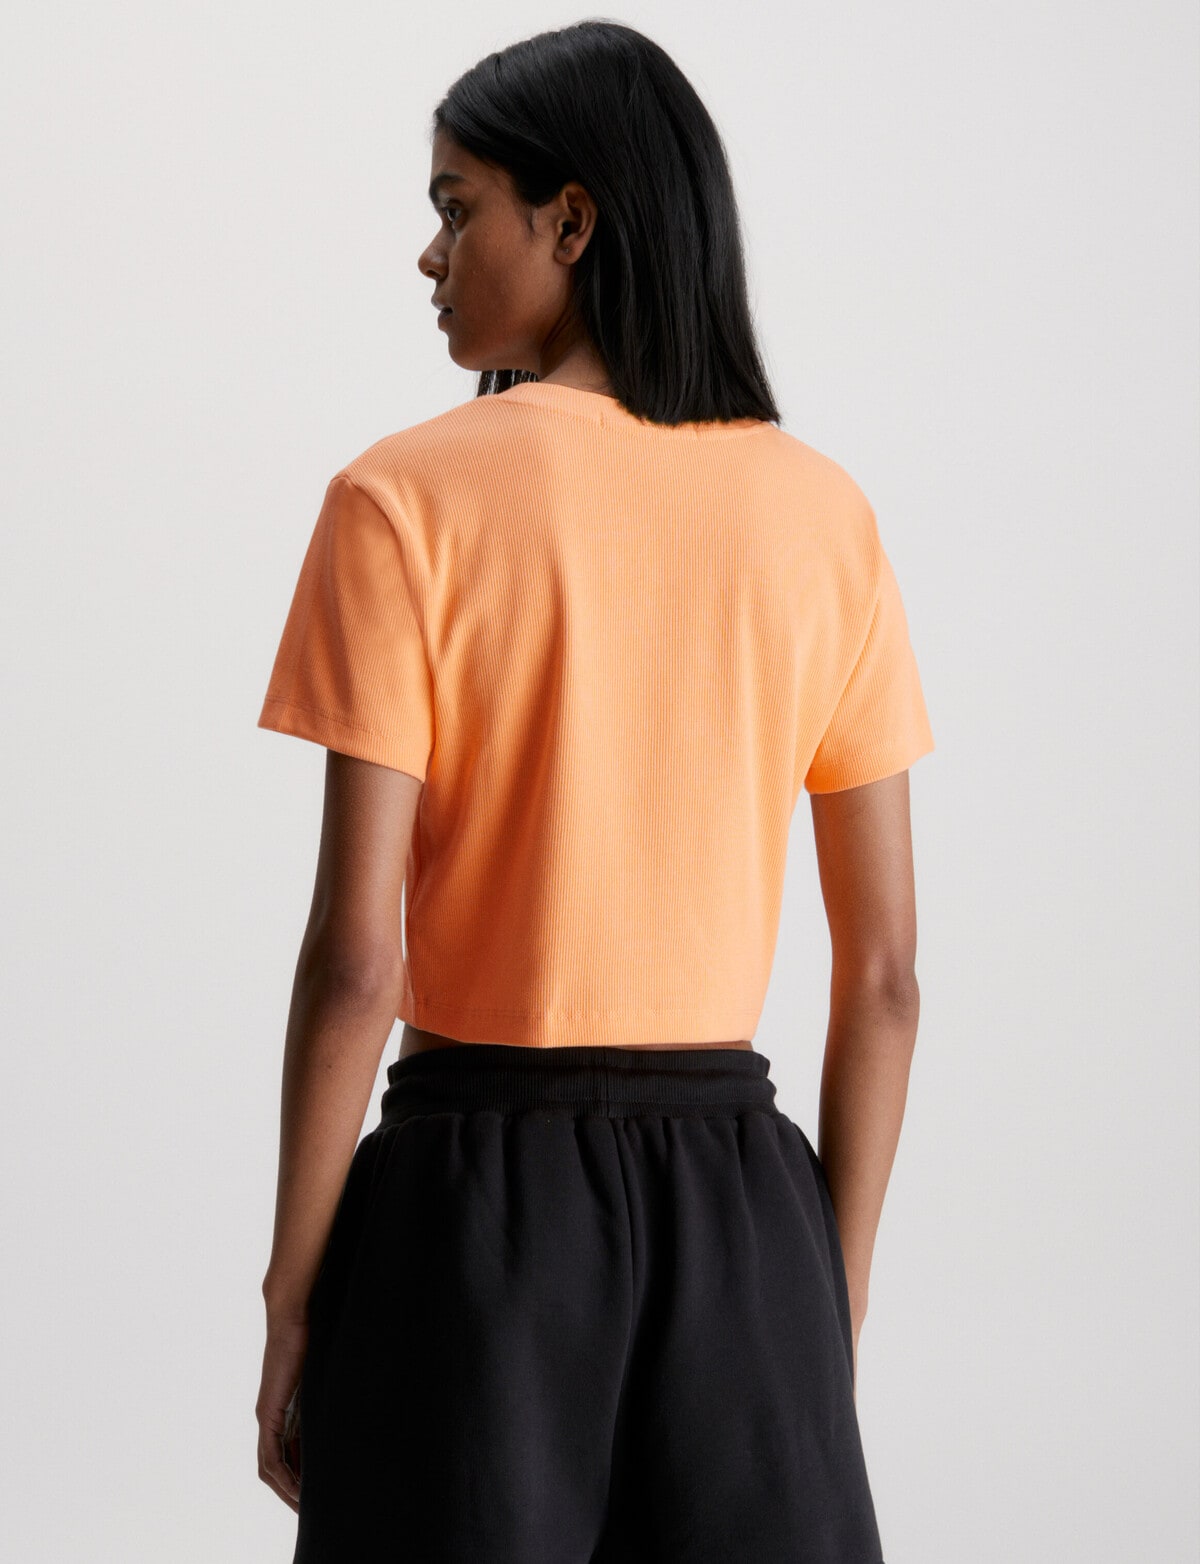 Calvin Klein Women’s Performance Split-Back T-Shirt Tops, Orange,  Large 